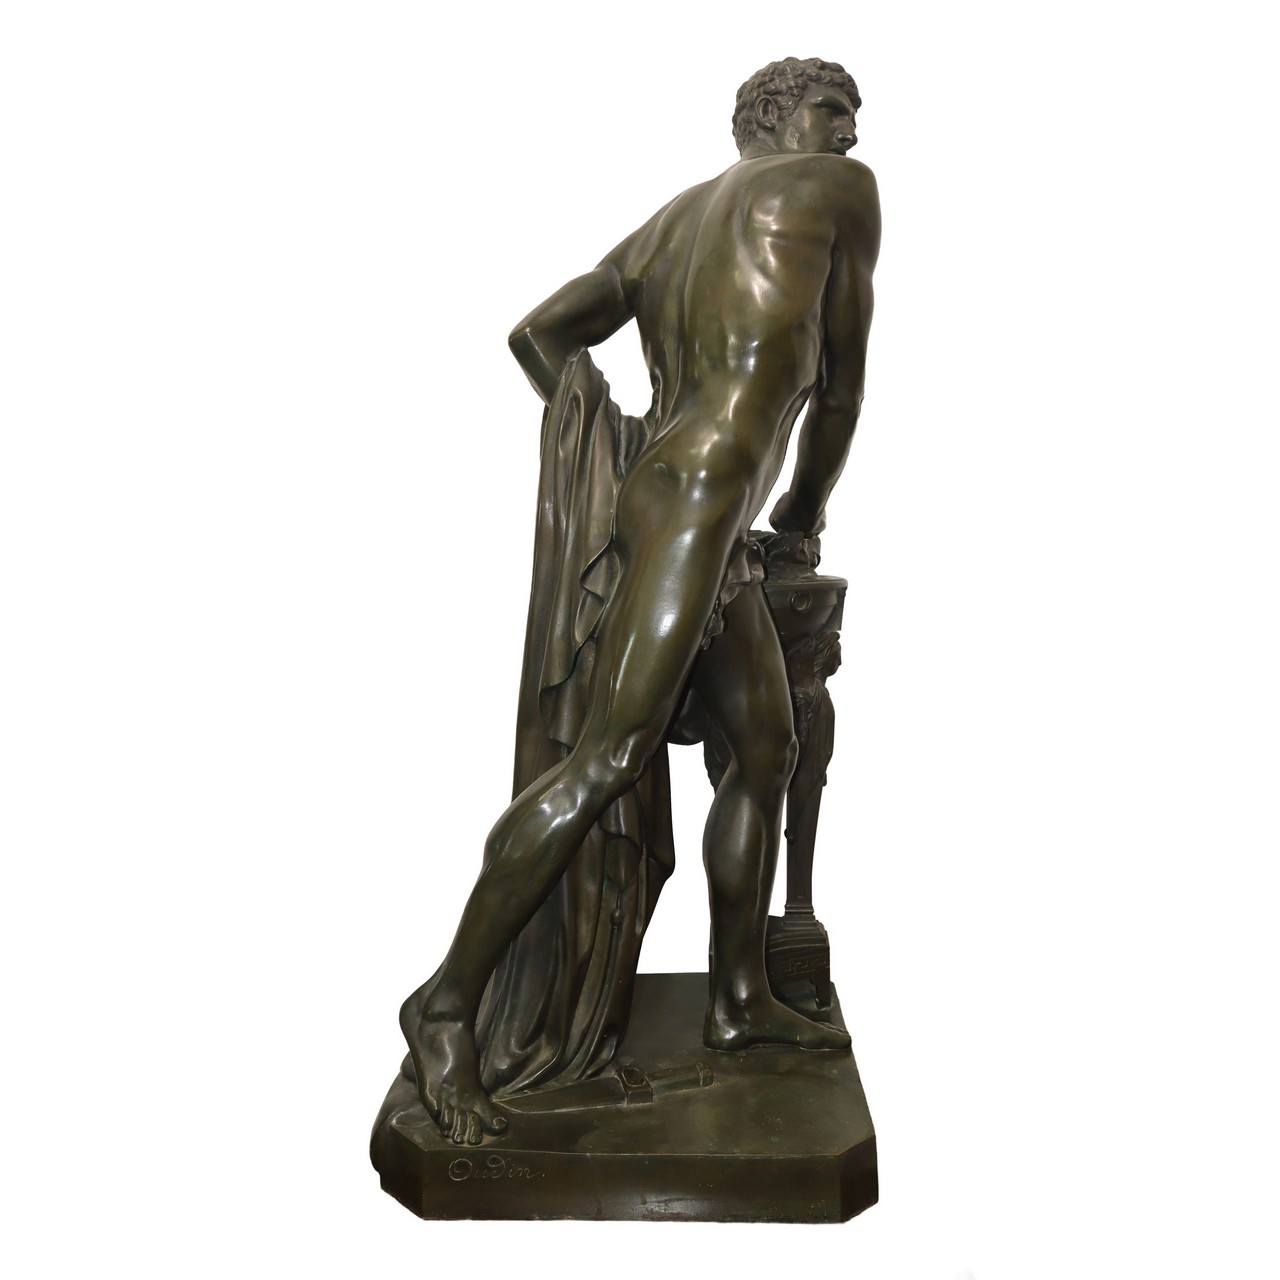 Oudin - Muzio Scevola in bronze, with wooden base - Image 3 of 4